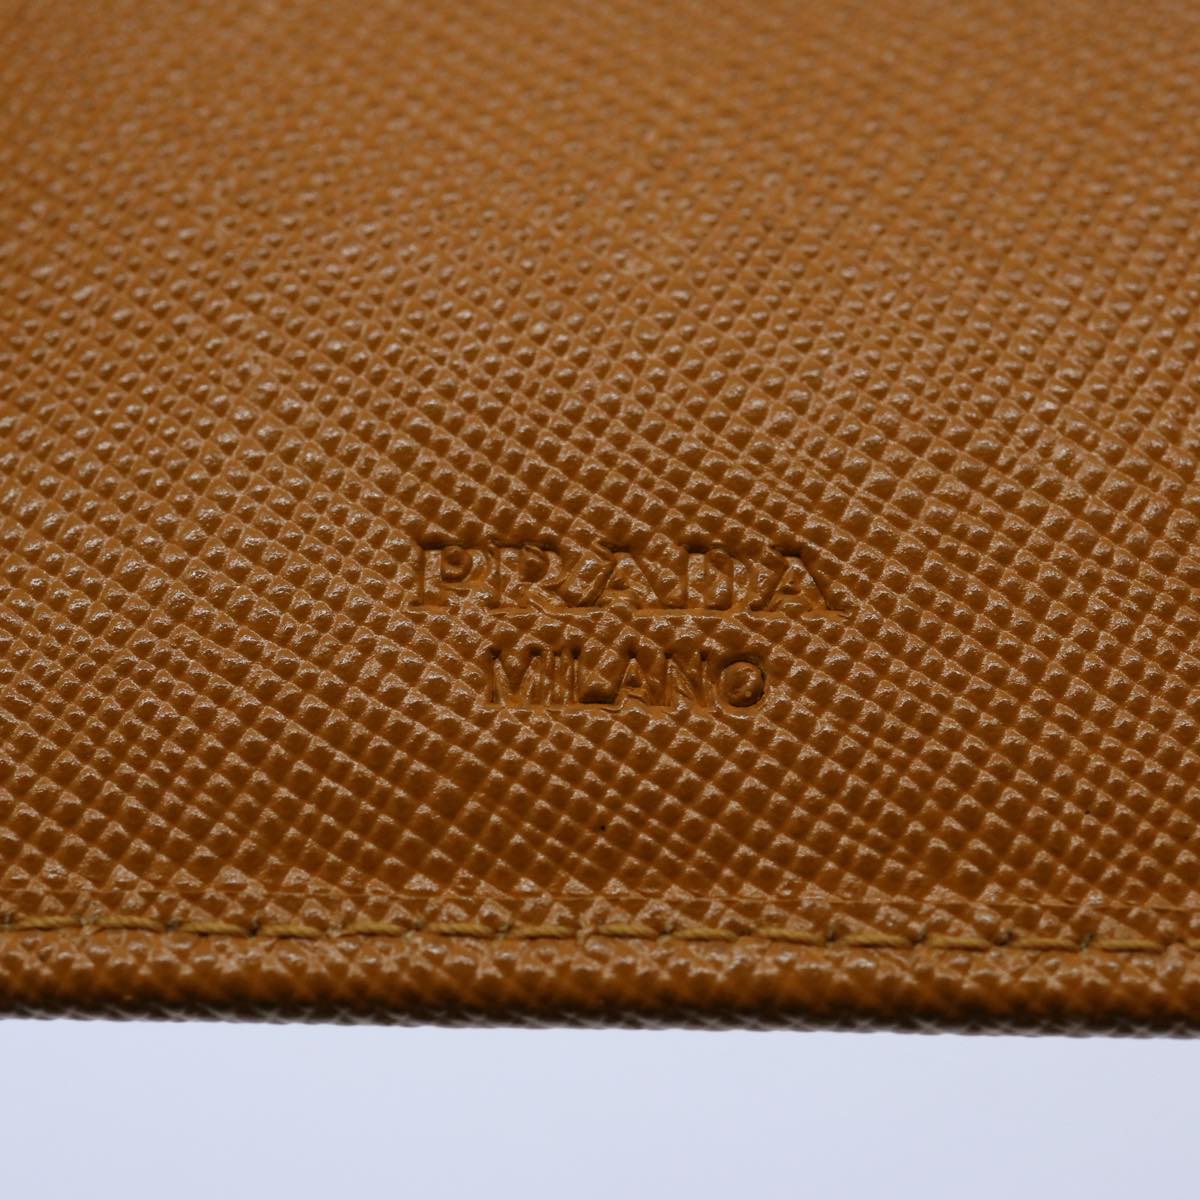 PRADA Wallet Safiano leather Yellow Auth am5275